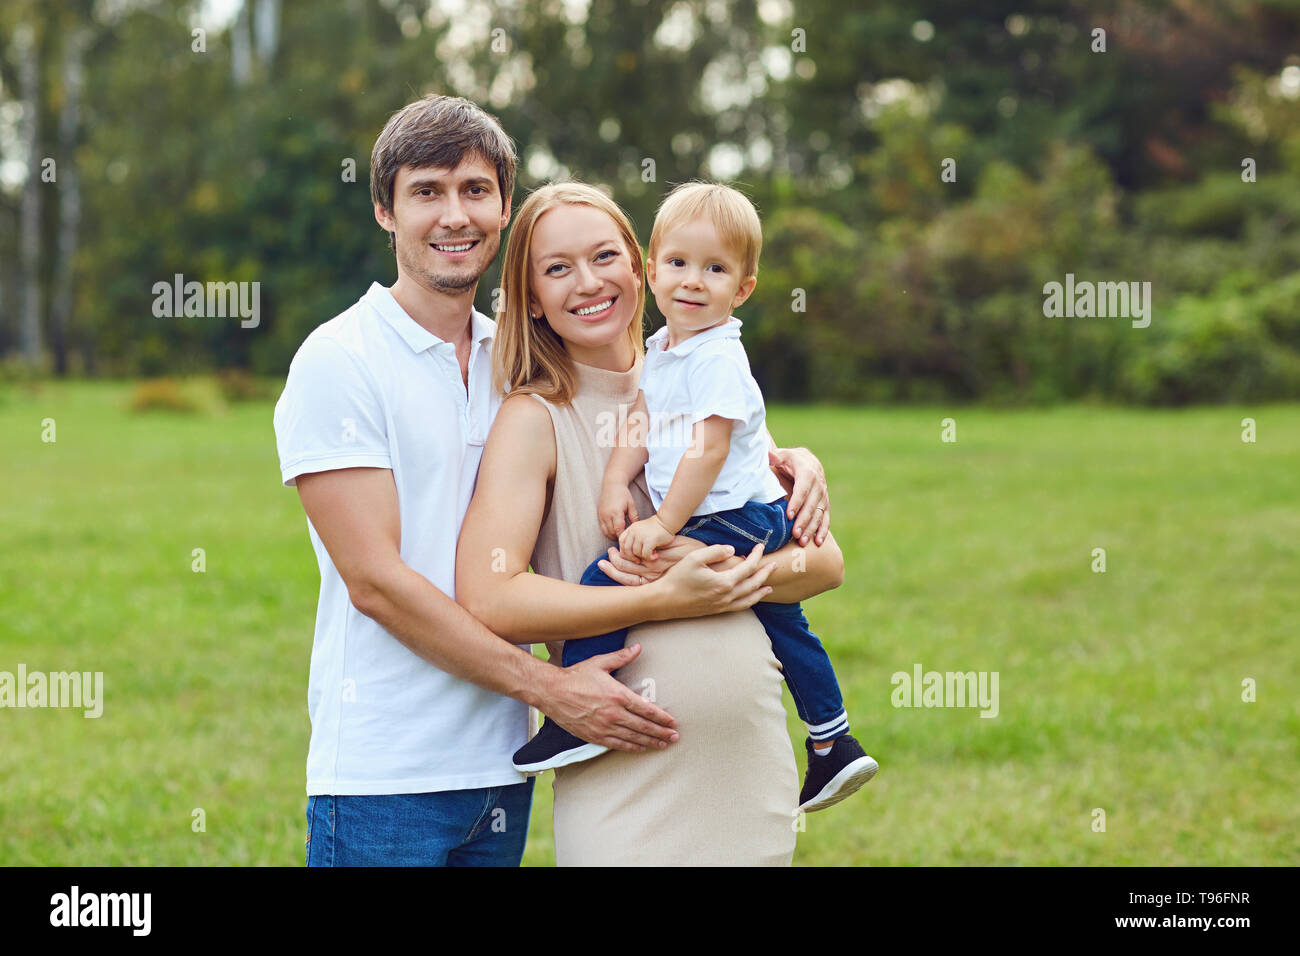 La famiglia felice insieme nel parco d'estate. Foto Stock